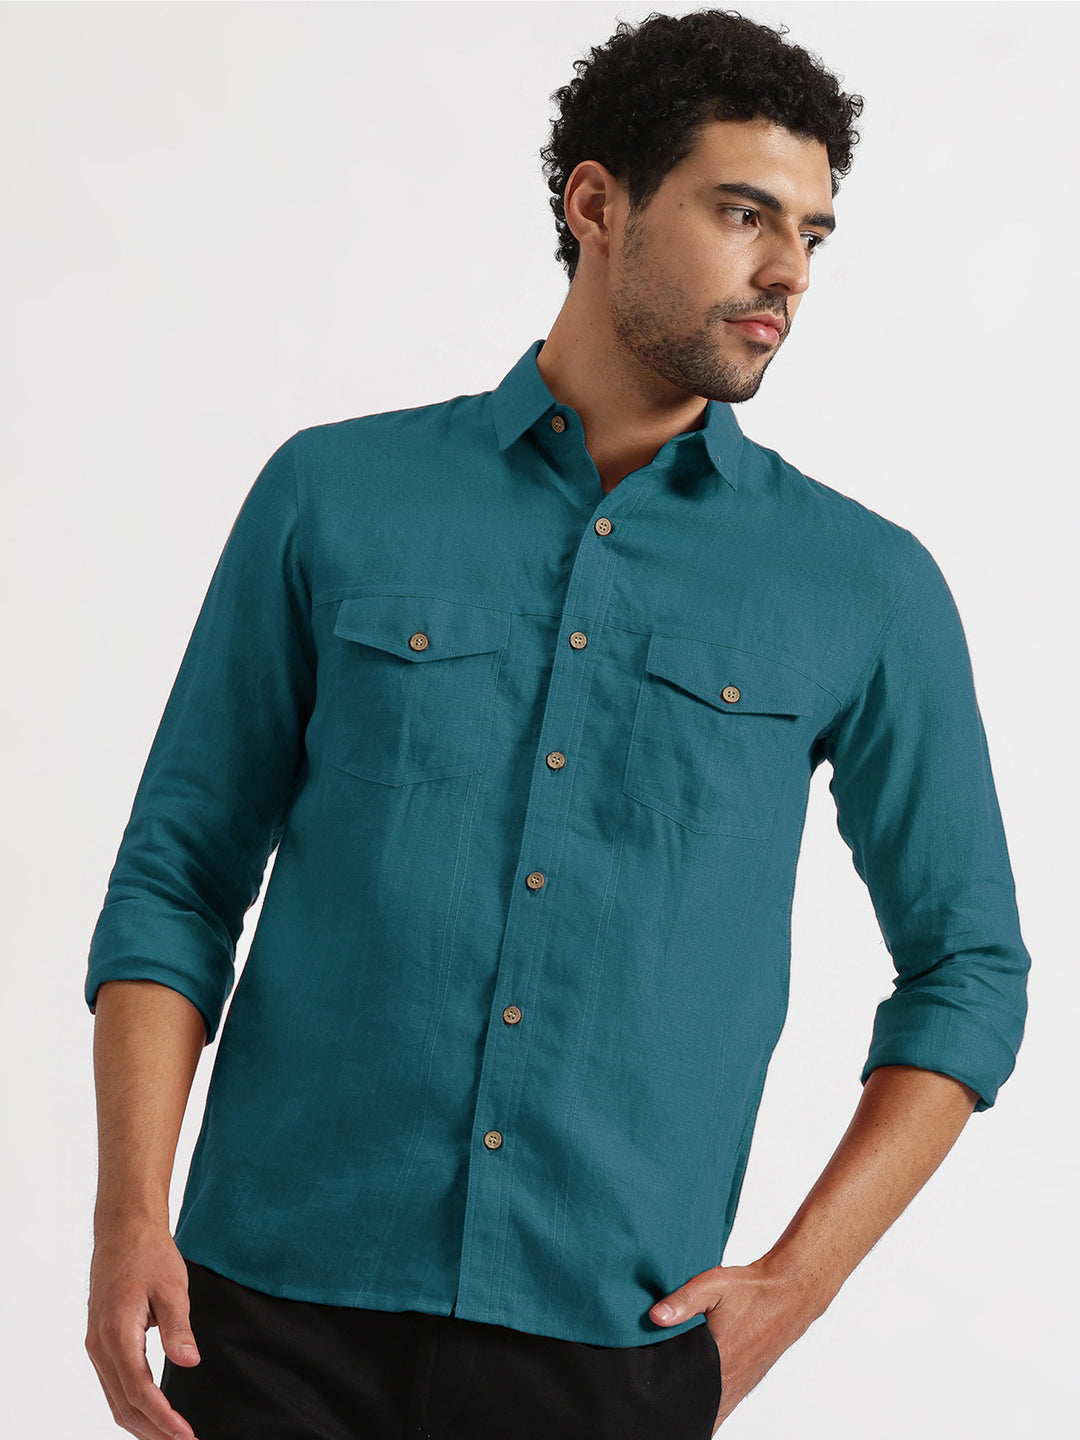 Thomas - Pure Linen Double Pocket Full Sleeve Shirt - Peacock Blue